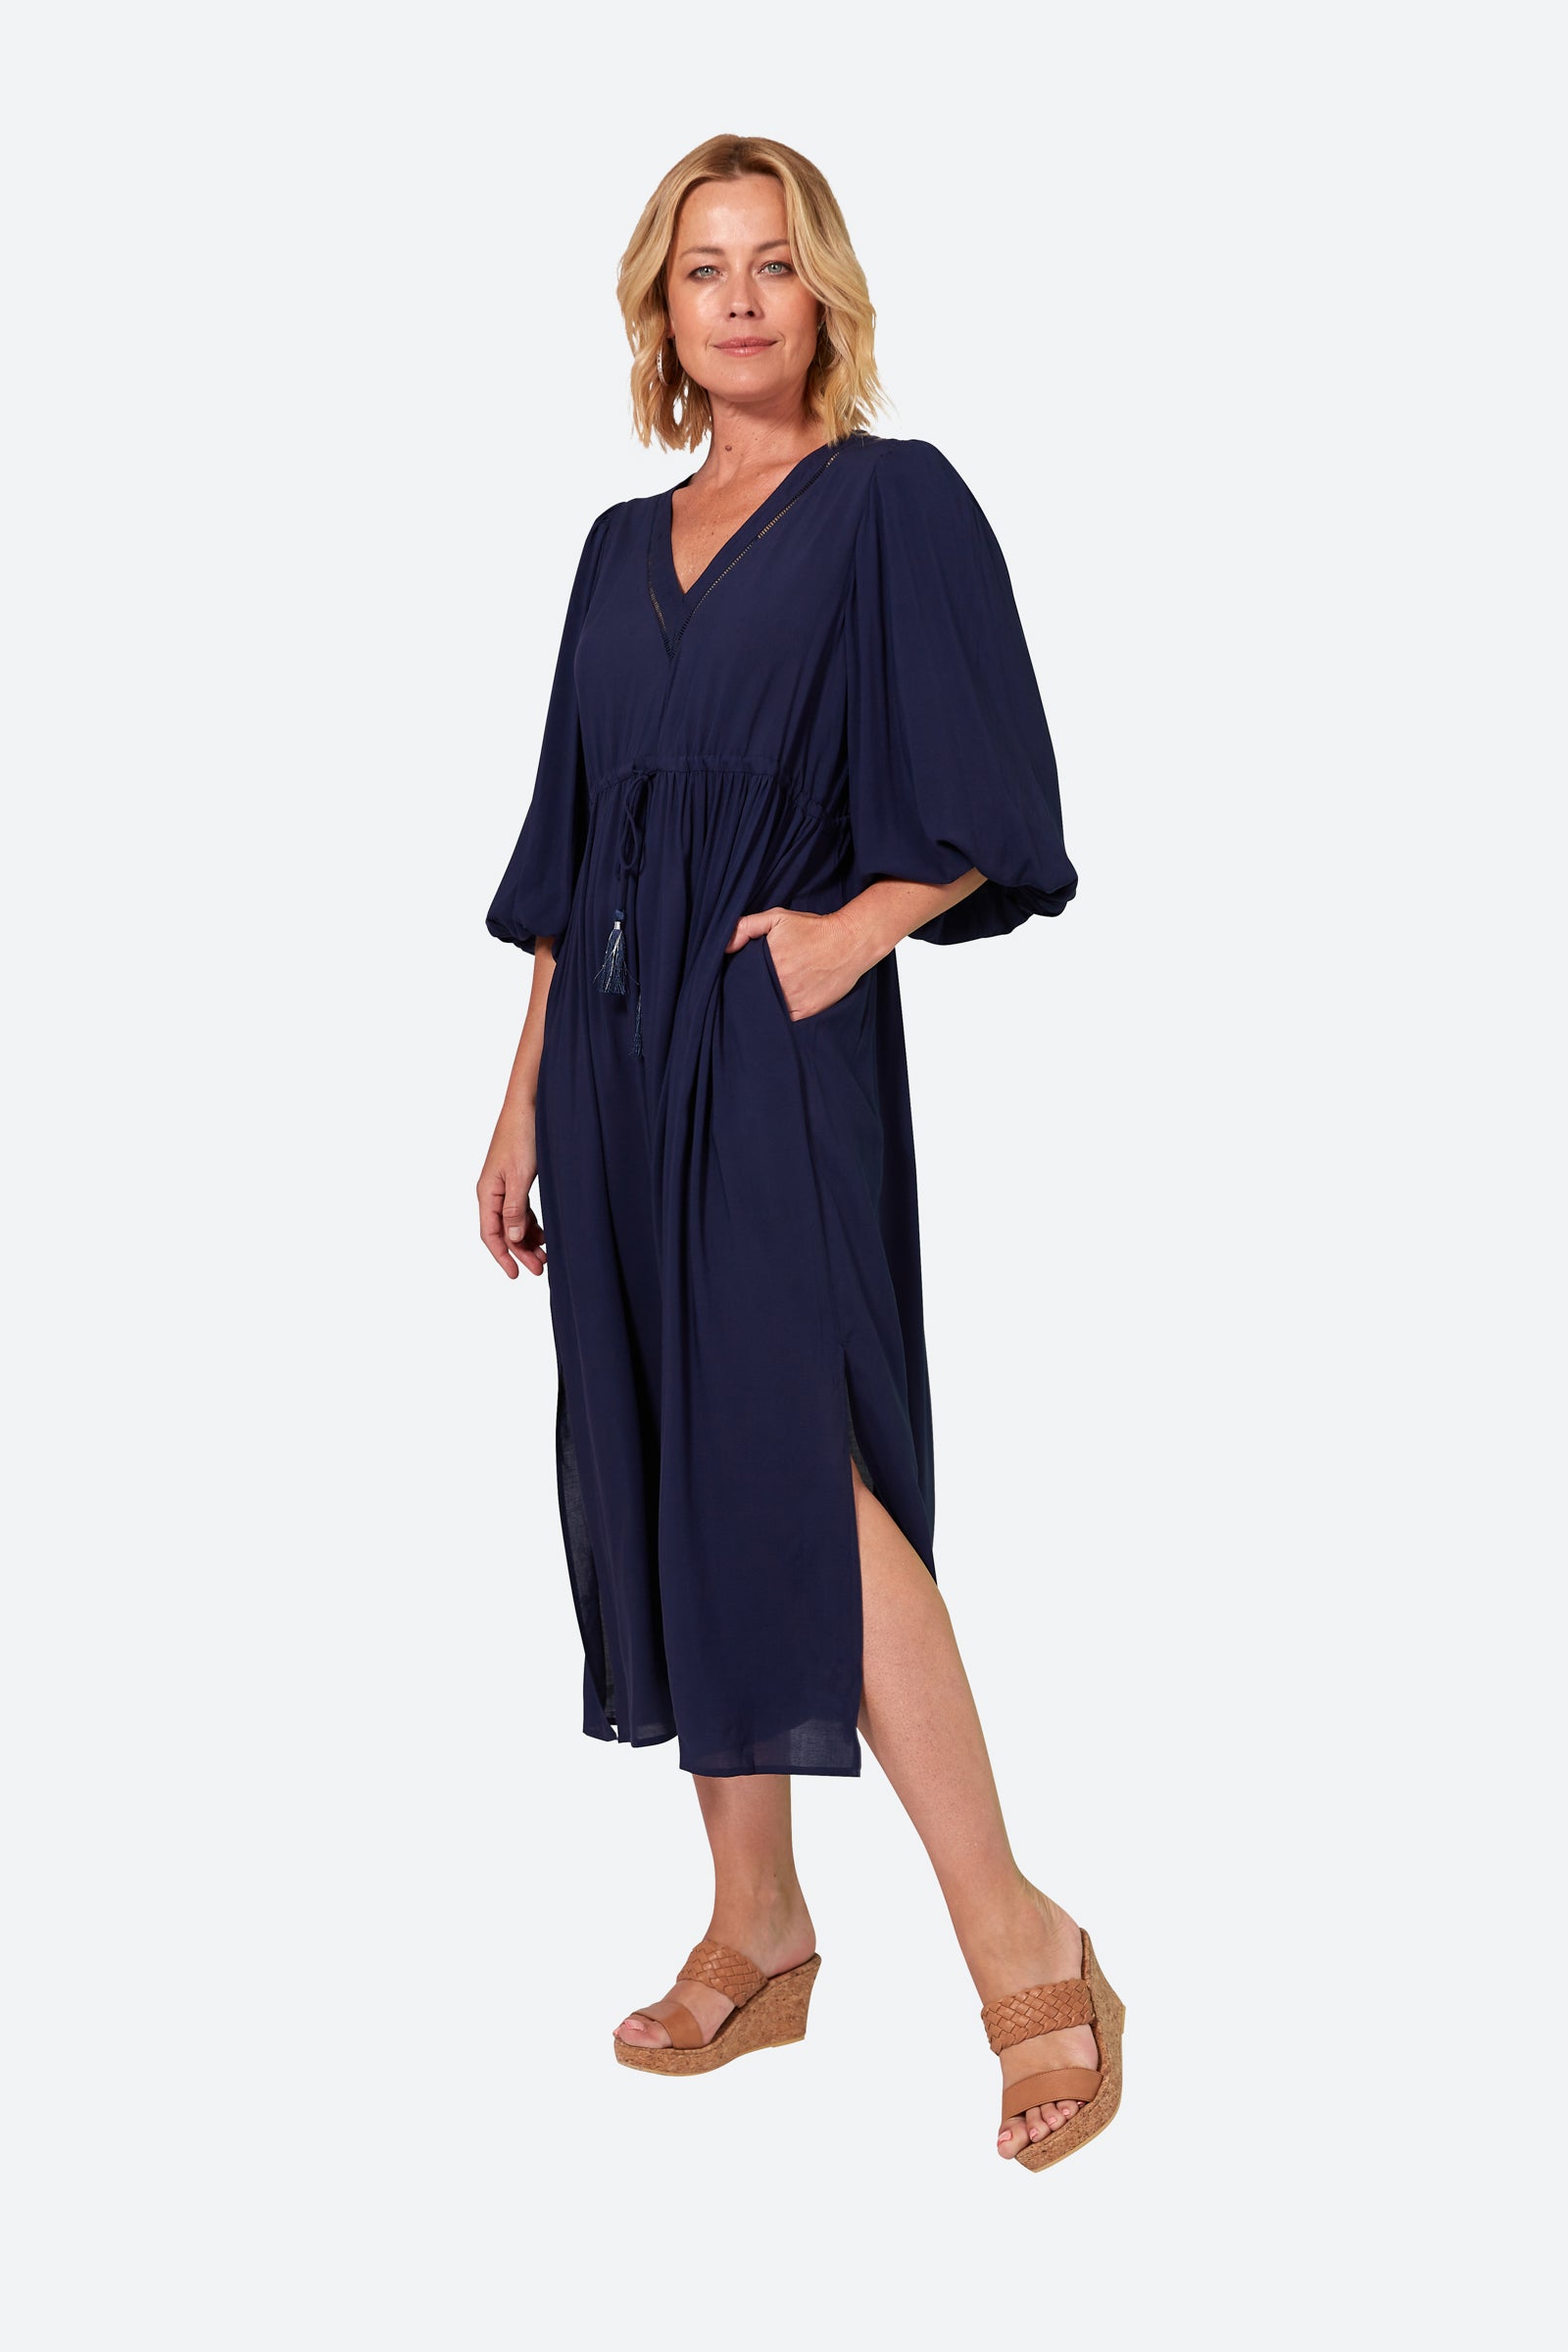 Esprit Maxi - Sapphire - eb&ive Clothing - Dress Maxi